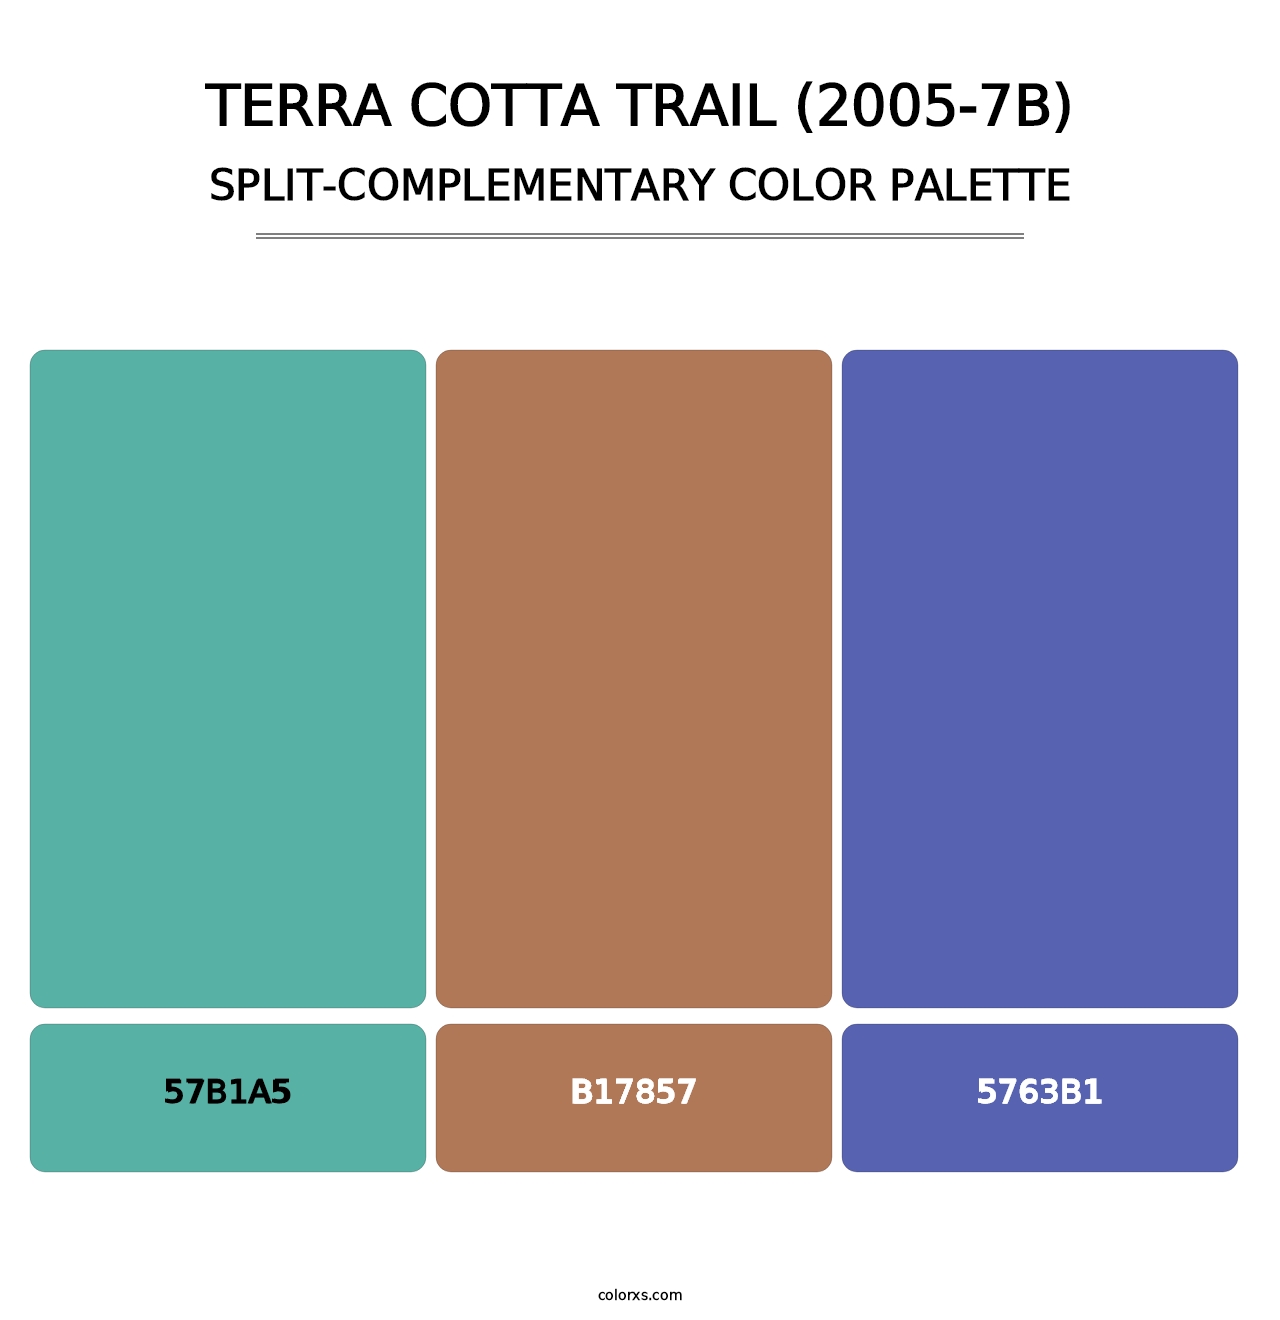 Terra Cotta Trail (2005-7B) - Split-Complementary Color Palette